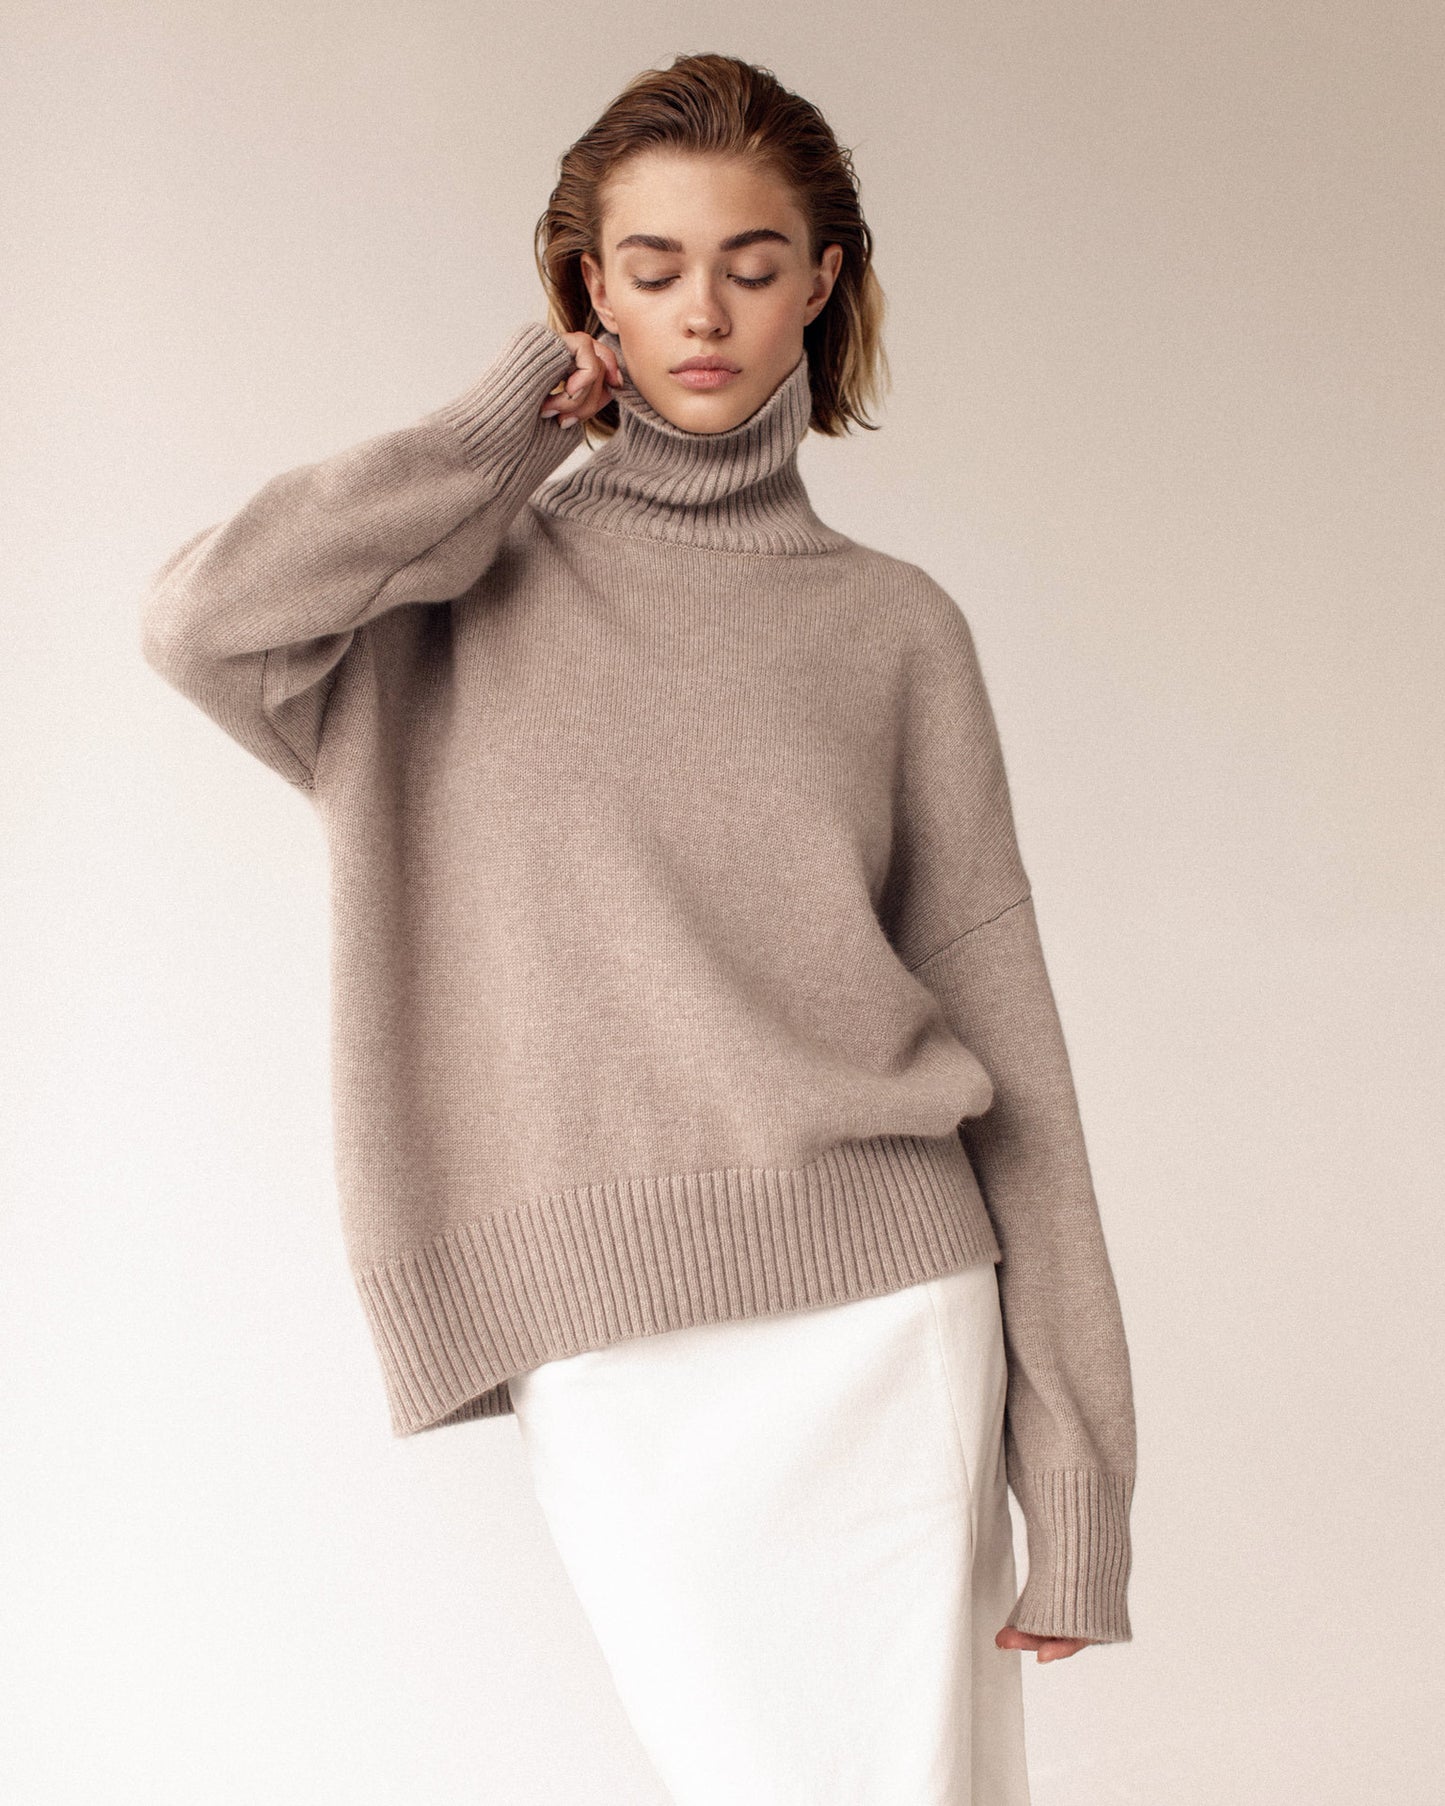 Autumn Winter Popular High Collar Loose Knitwear Sweater for Women